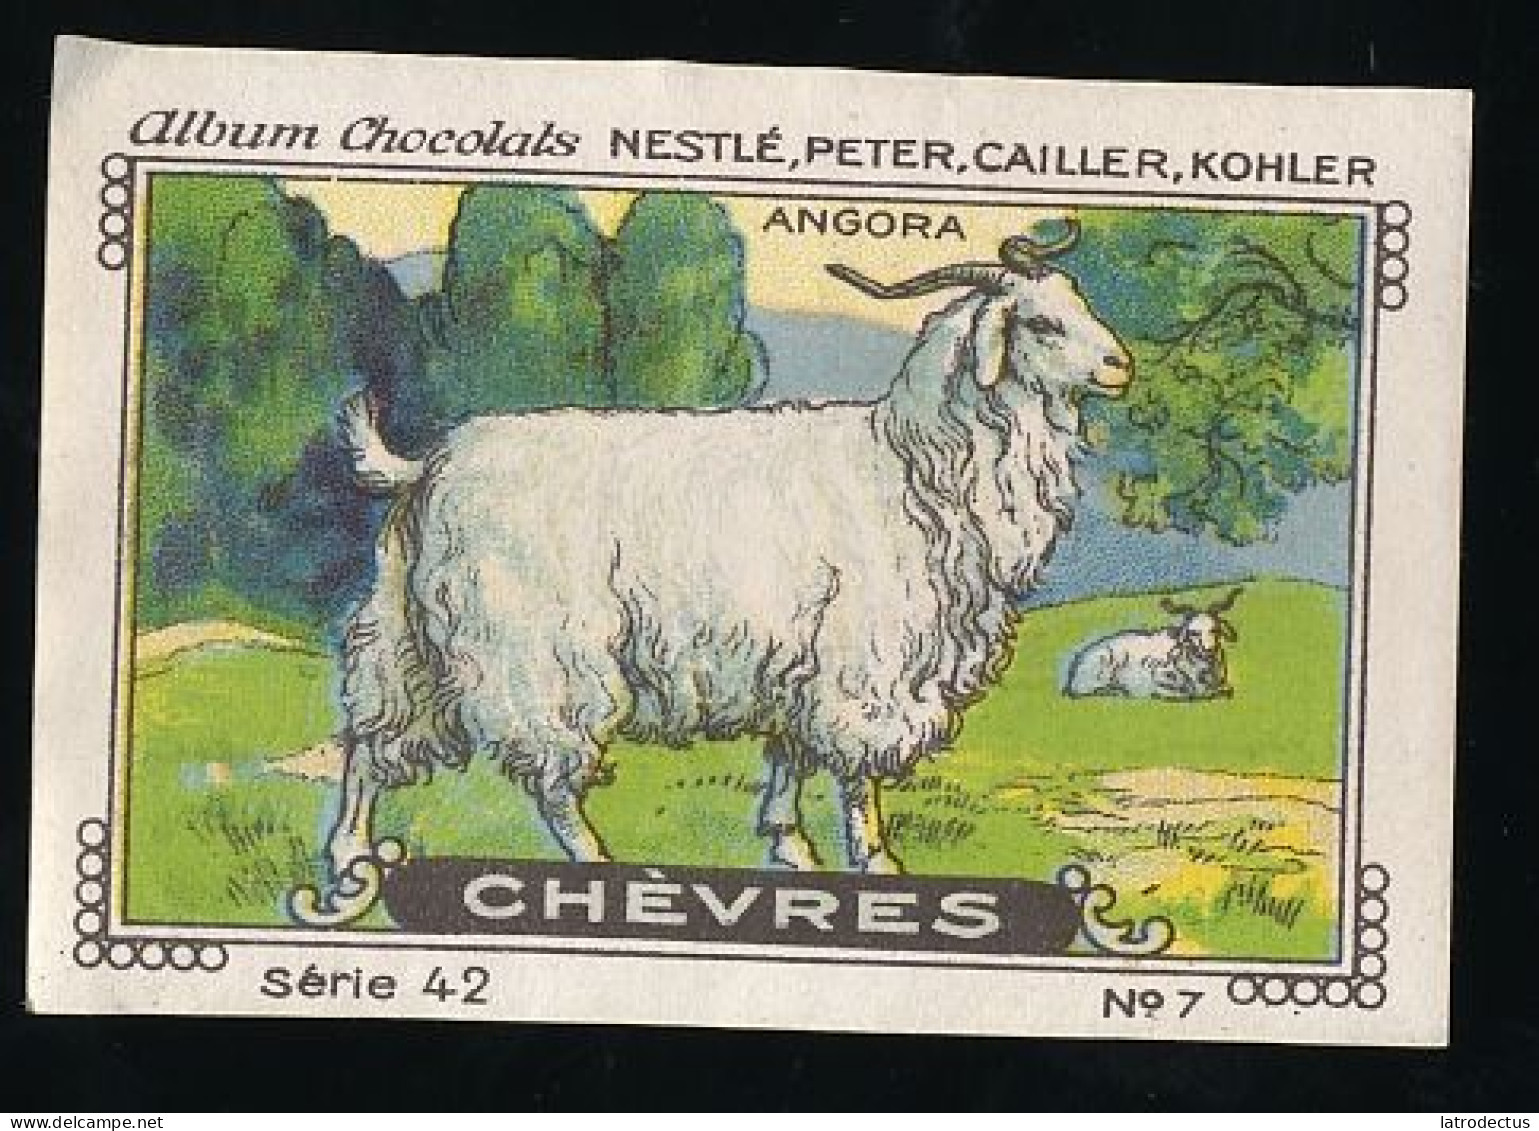 Nestlé - 42 - Chèvres, Goats - 7 - Angora - Nestlé